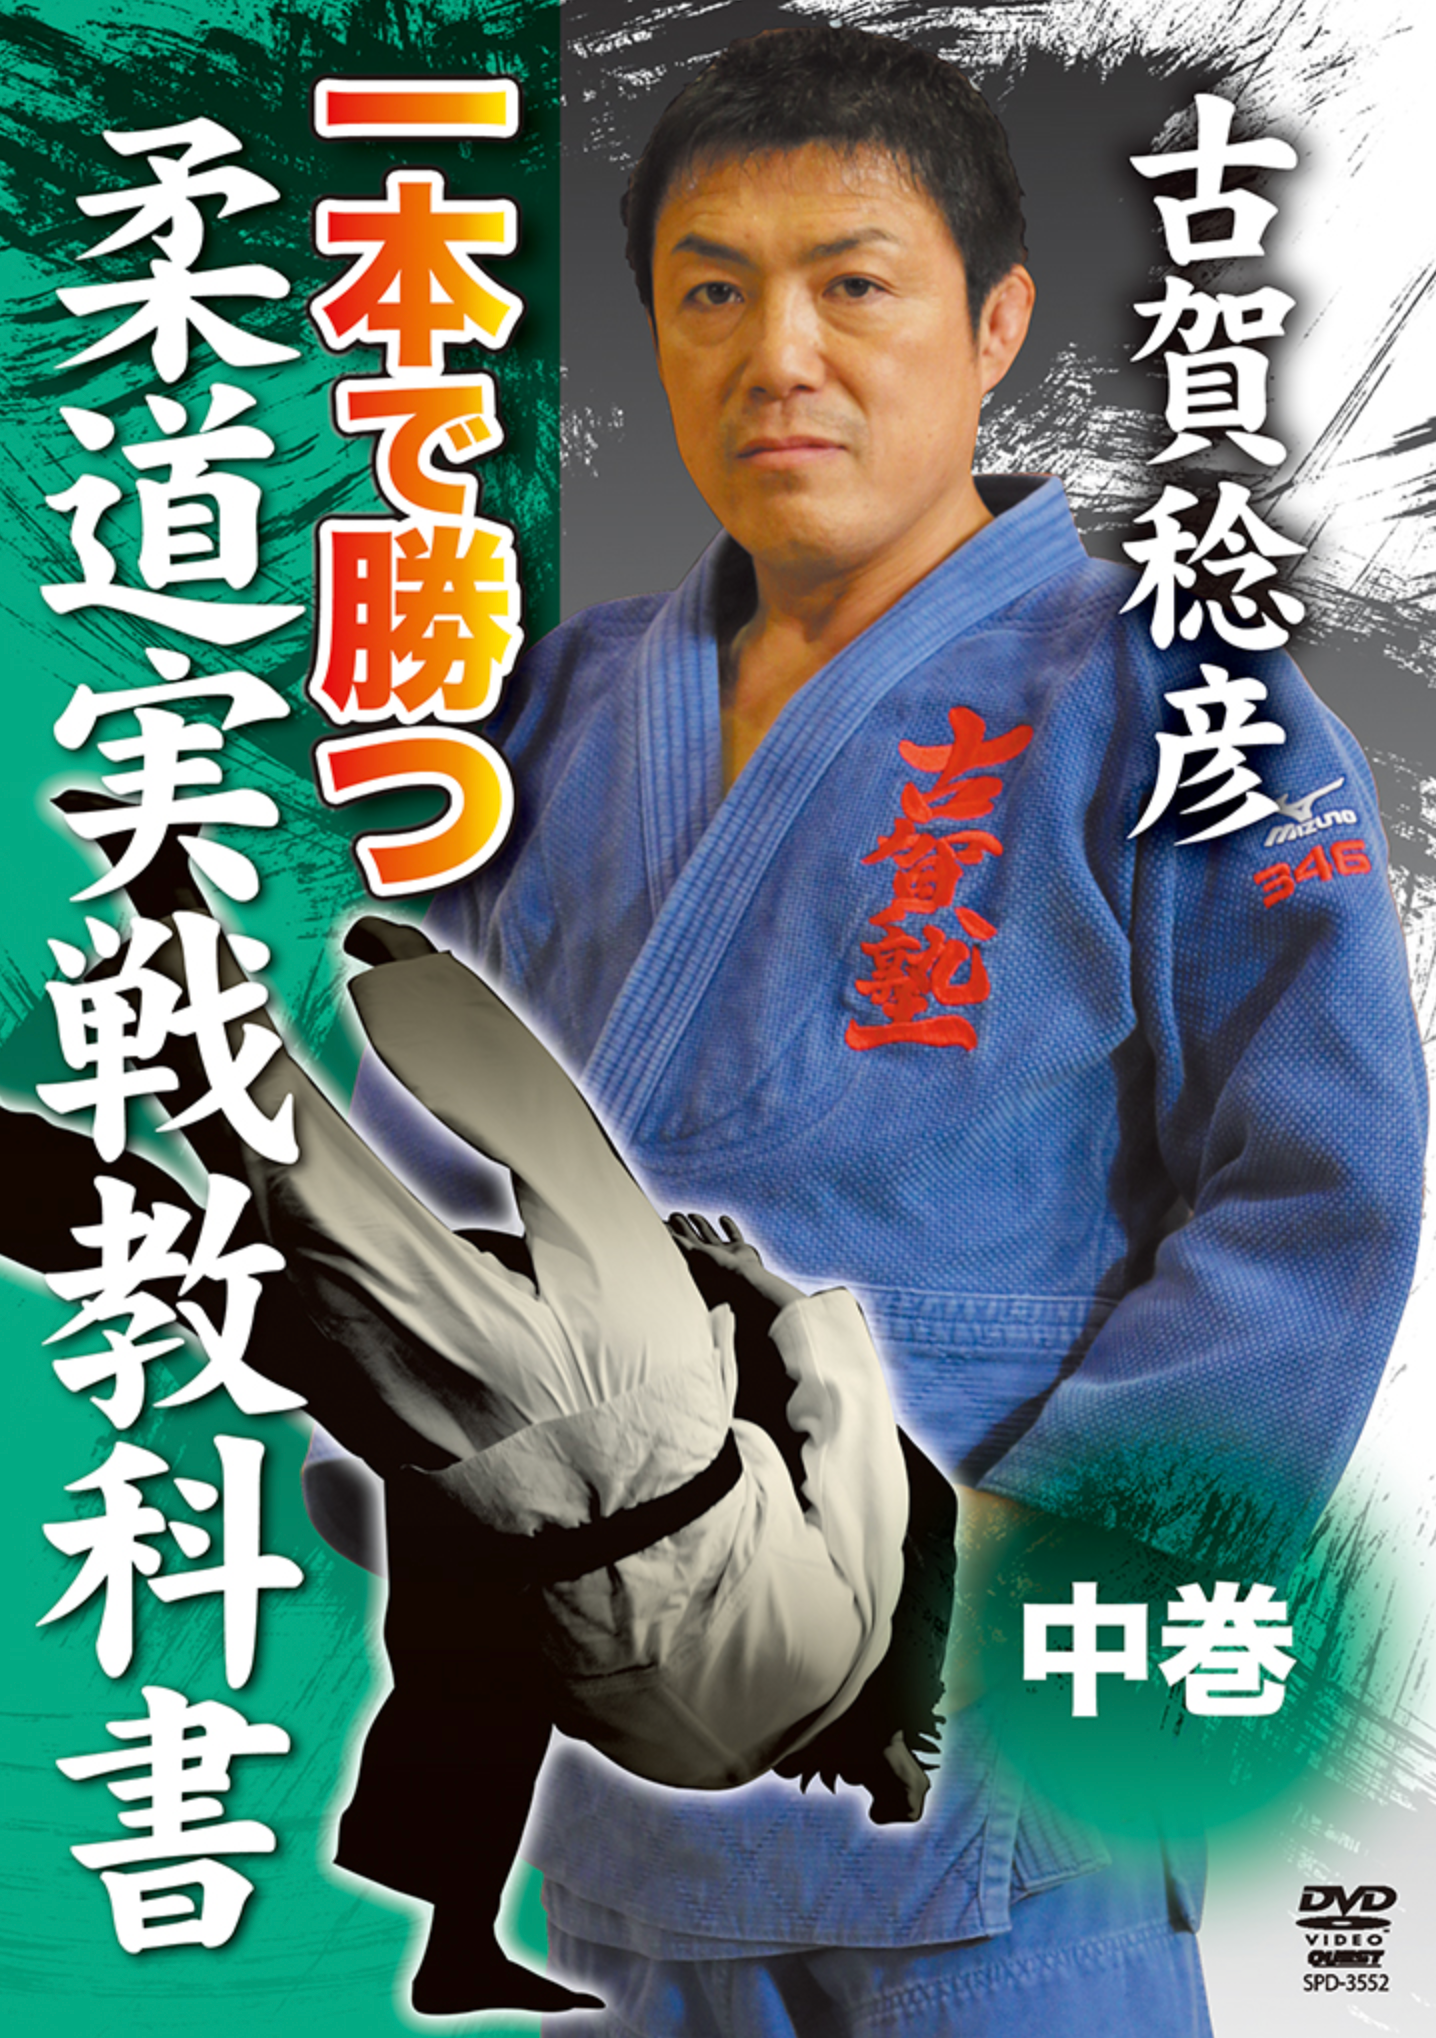 Win by Ippon Judo DVD 2 with Toshihiko Koga - Budovideos Inc